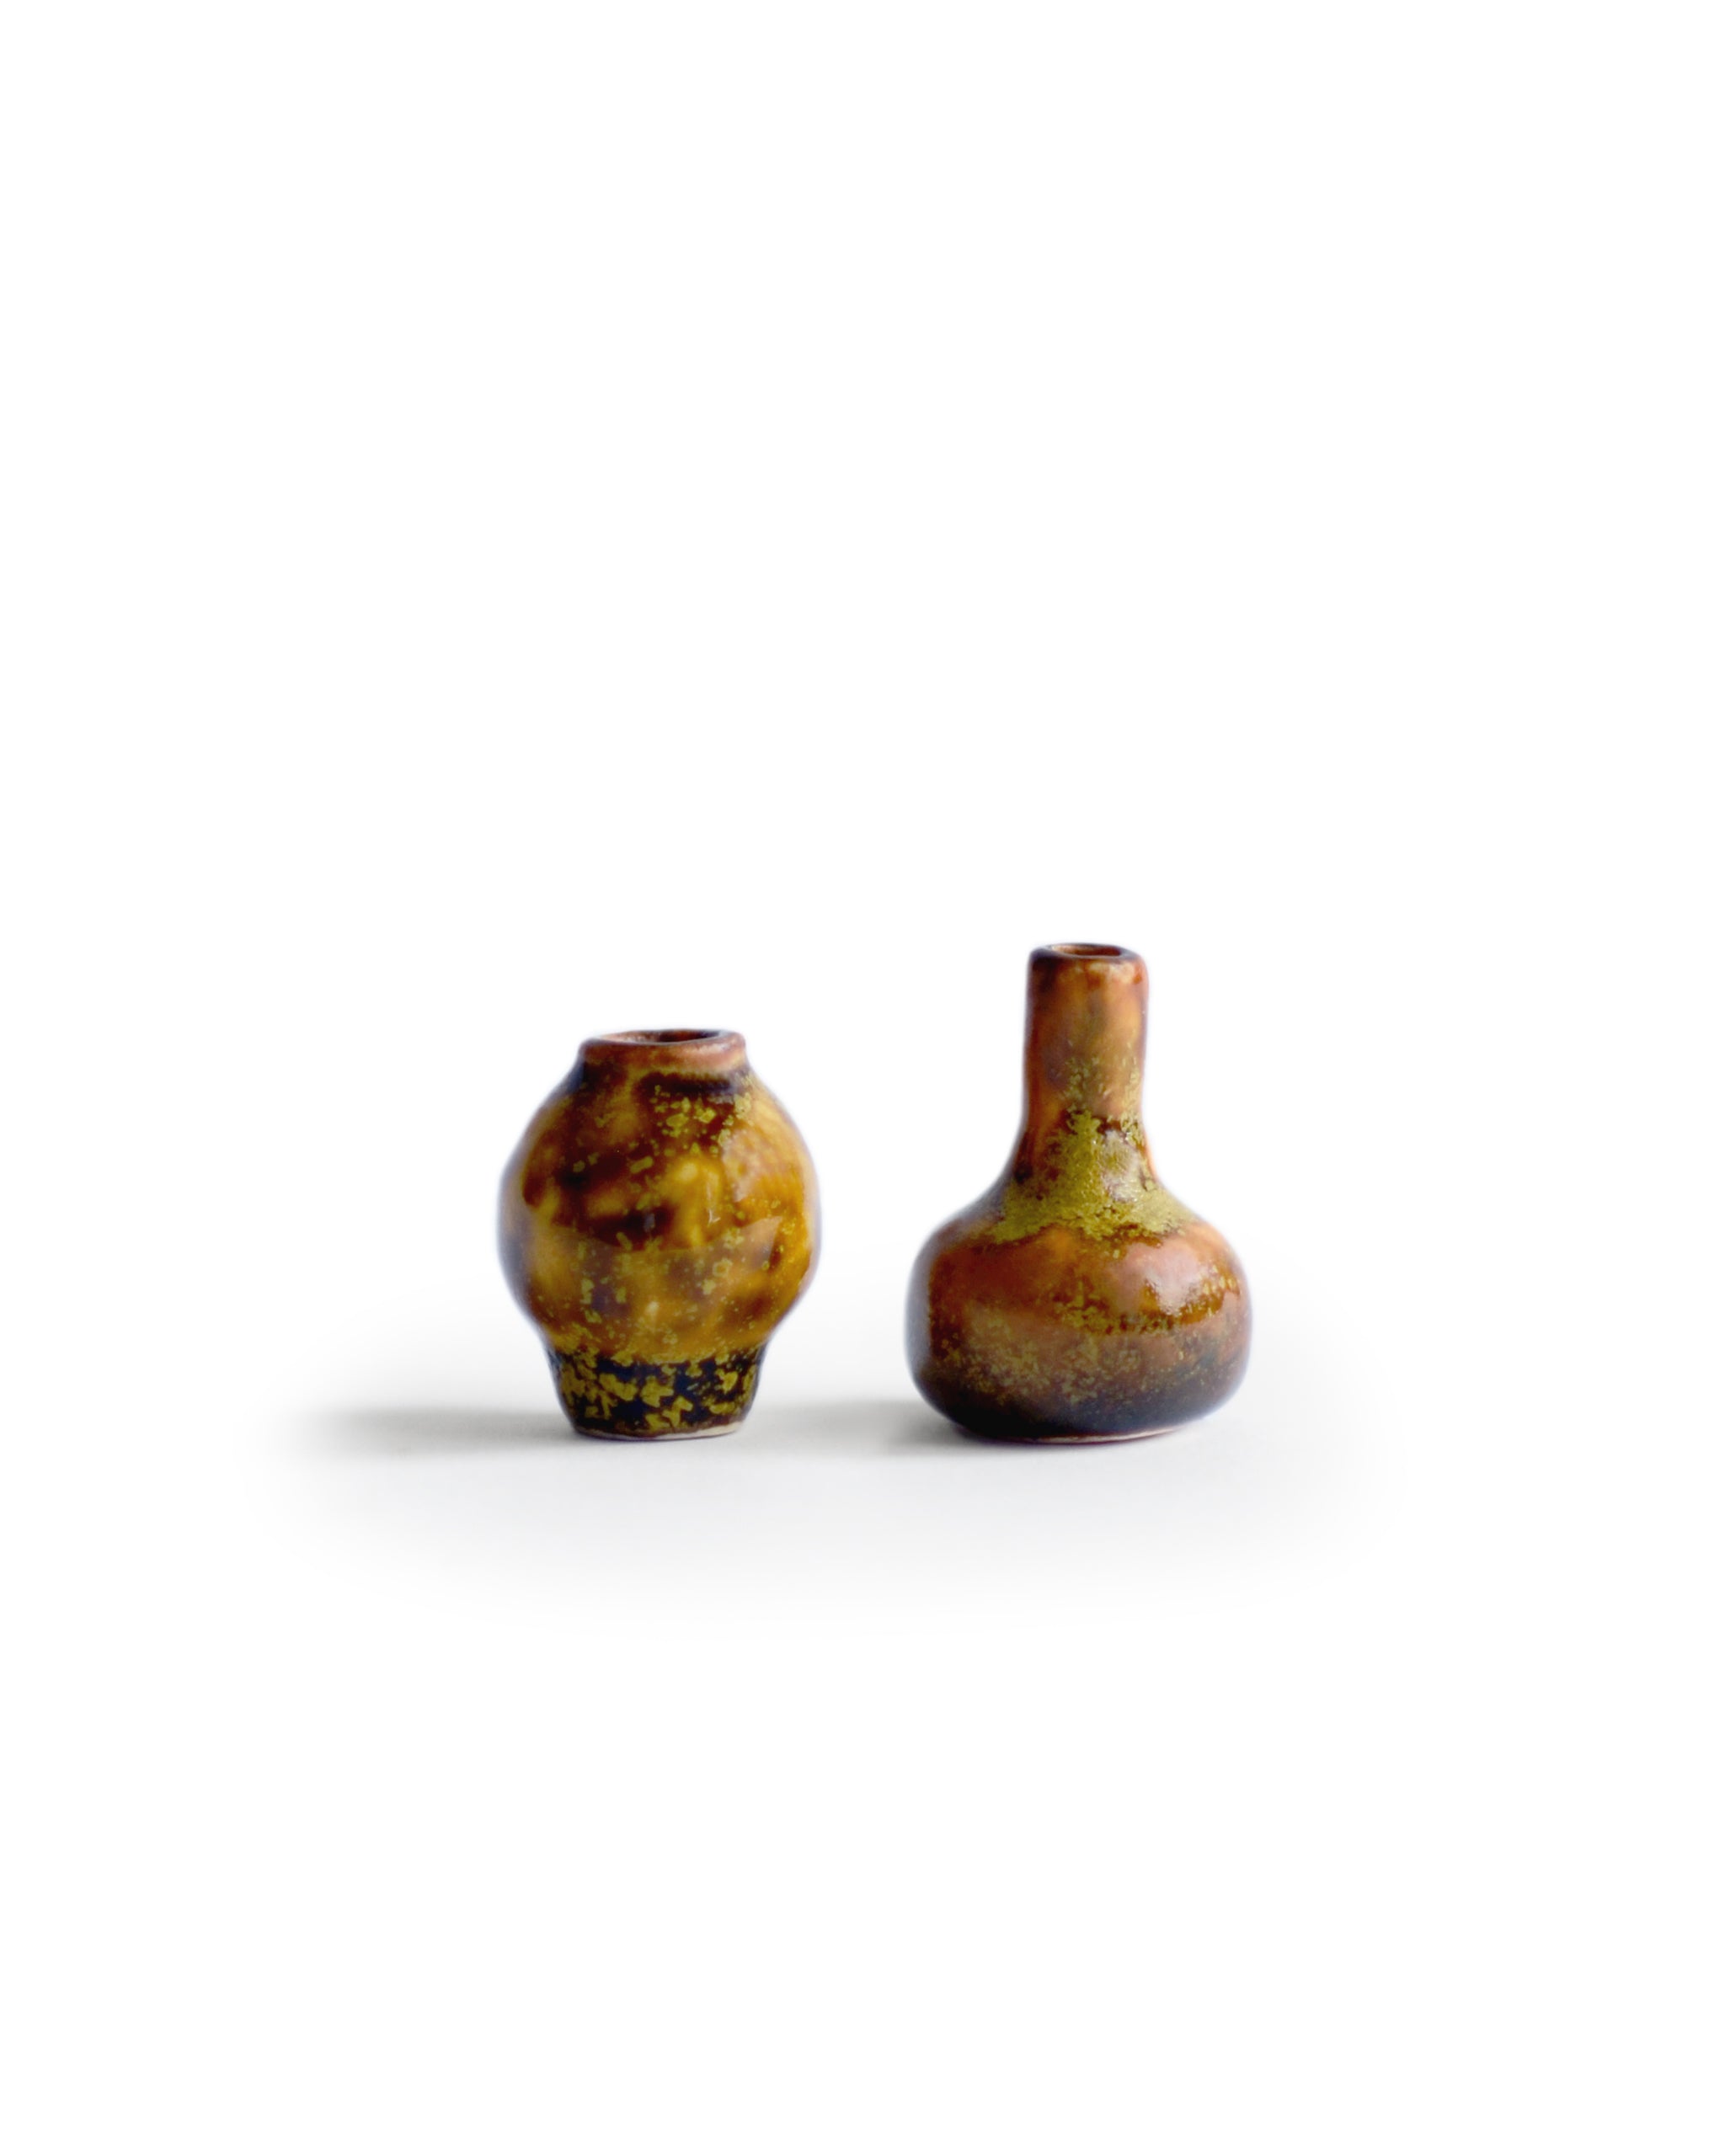  Silhouetted image of 2 brown glazed mini vases from the Mini Vase Set -Duo II by Dani Sujin x Nalata Nalata against white background.